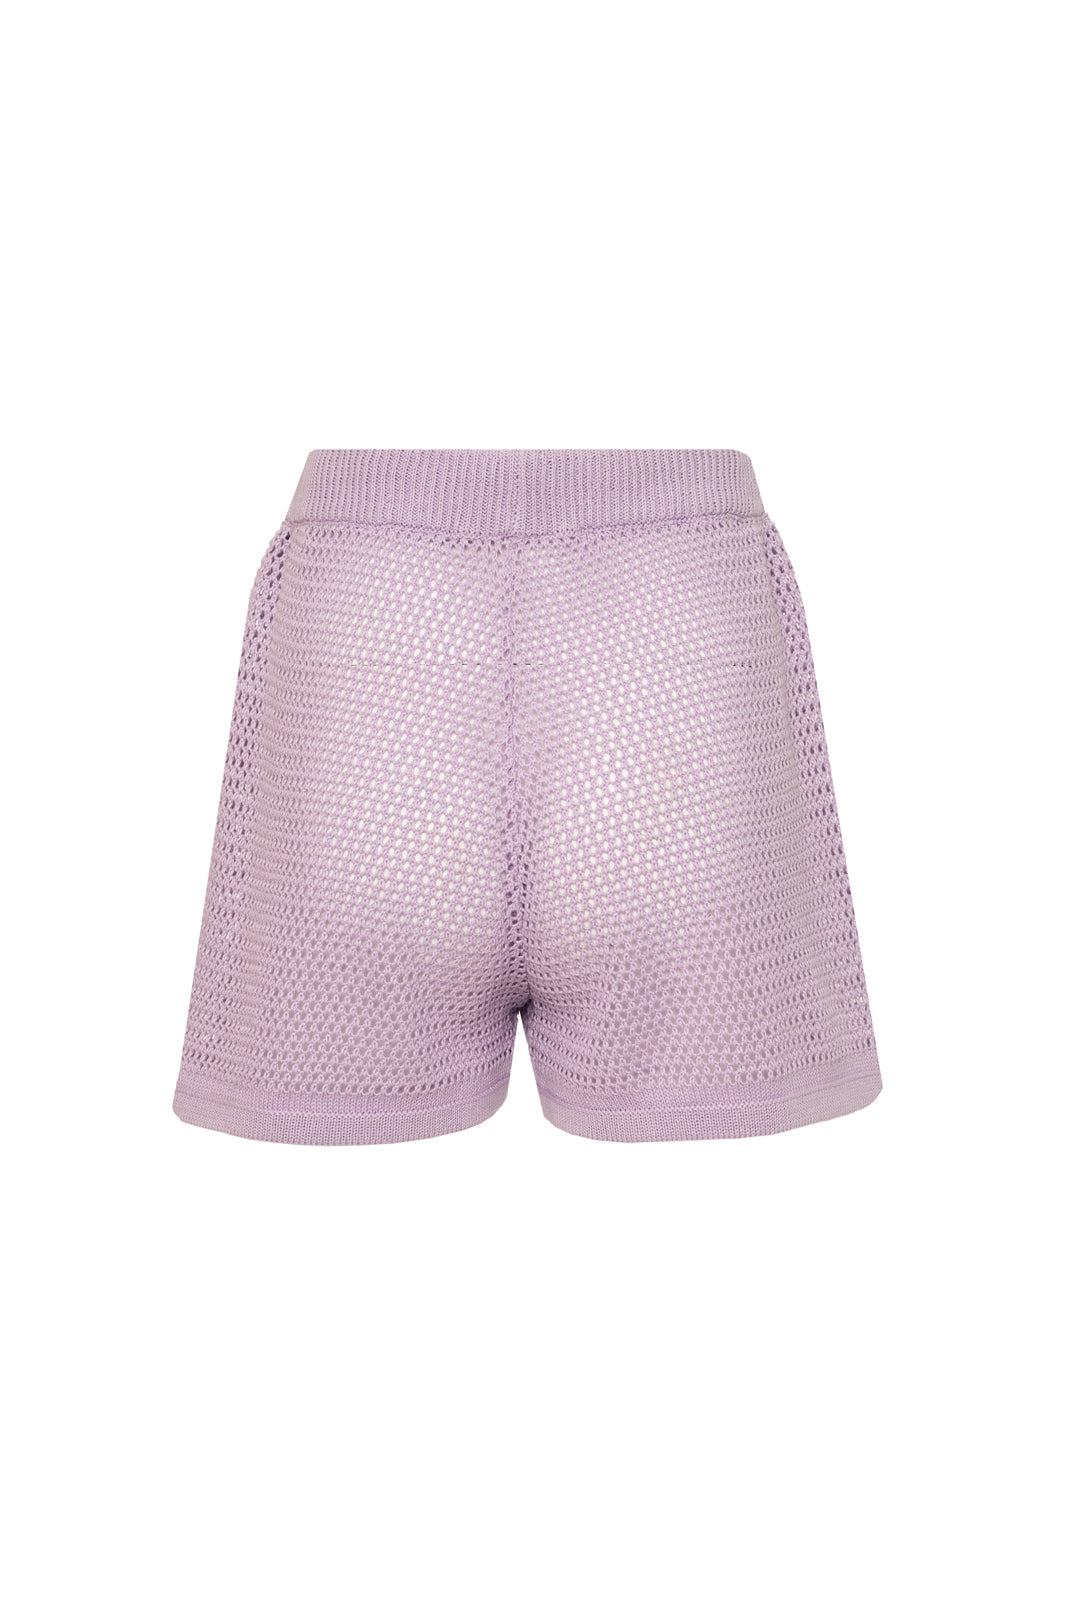 FINCH knit shorts - lavender